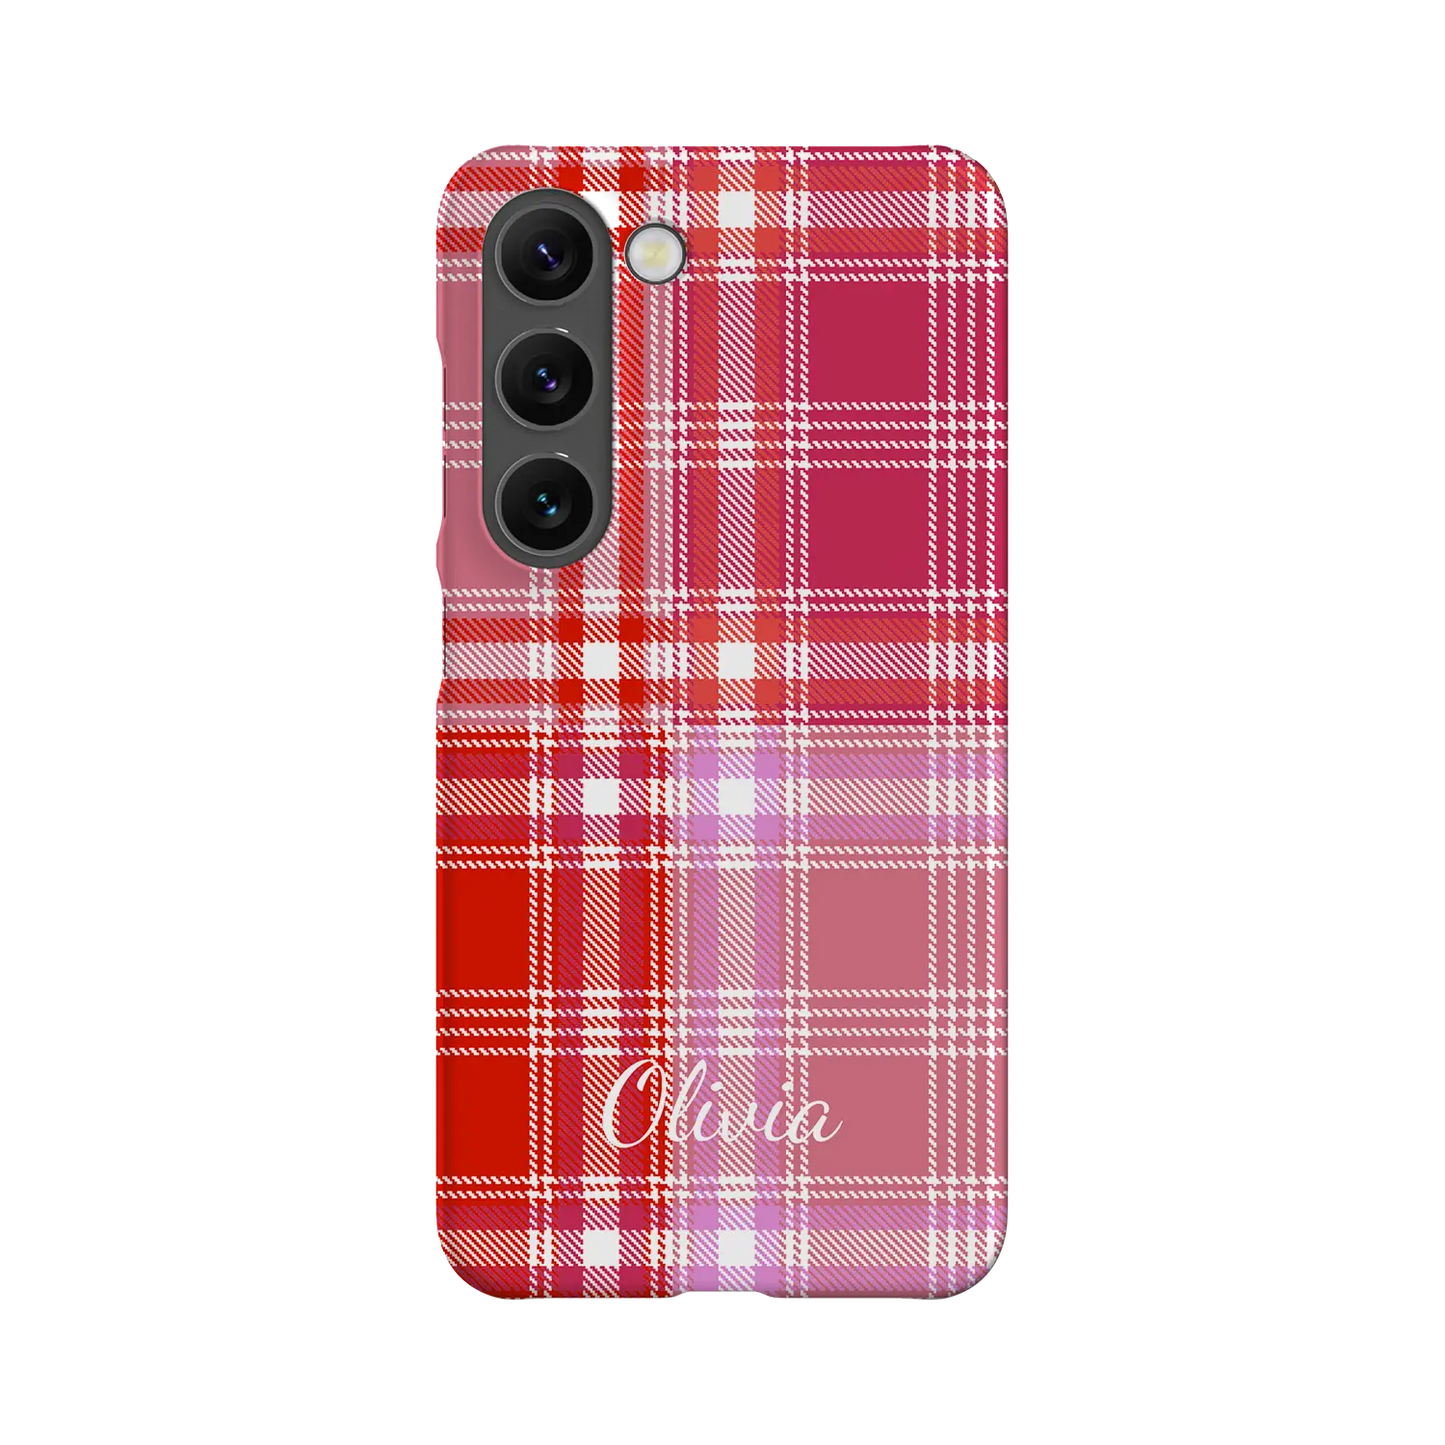 Plaid & Simple - Custom Galaxy S Case